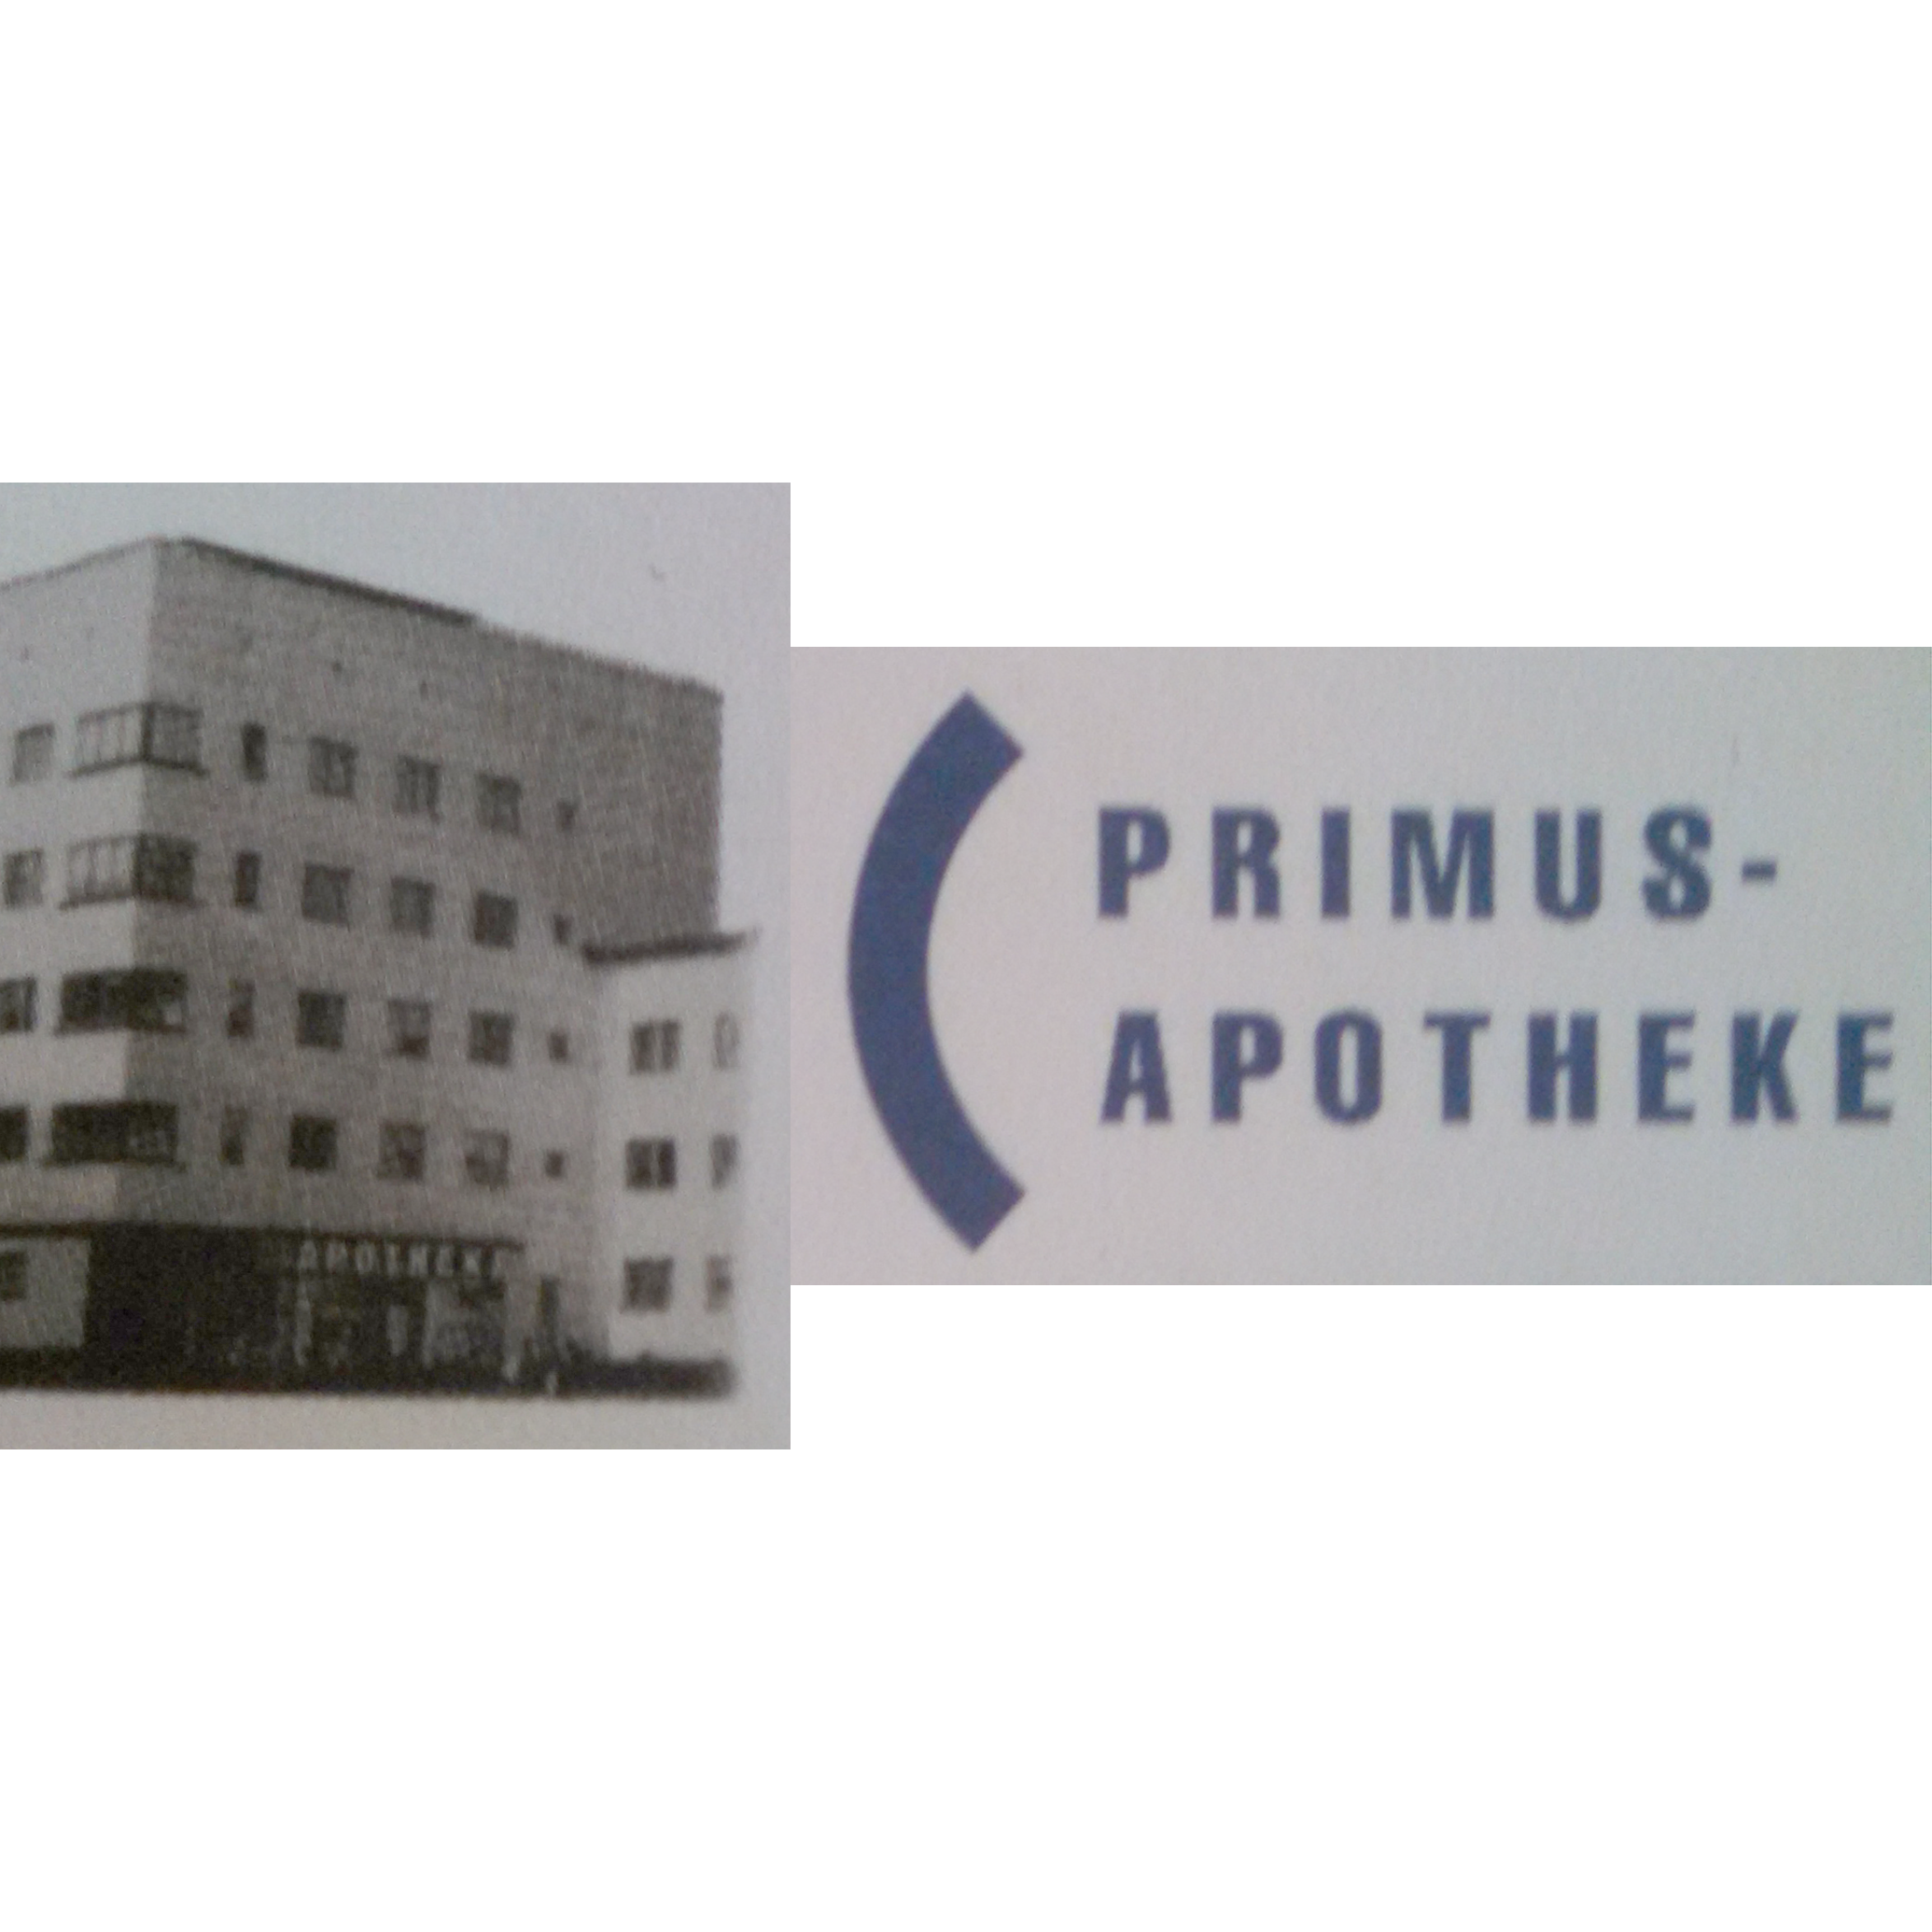 Primus-Apotheke in Berlin - Logo